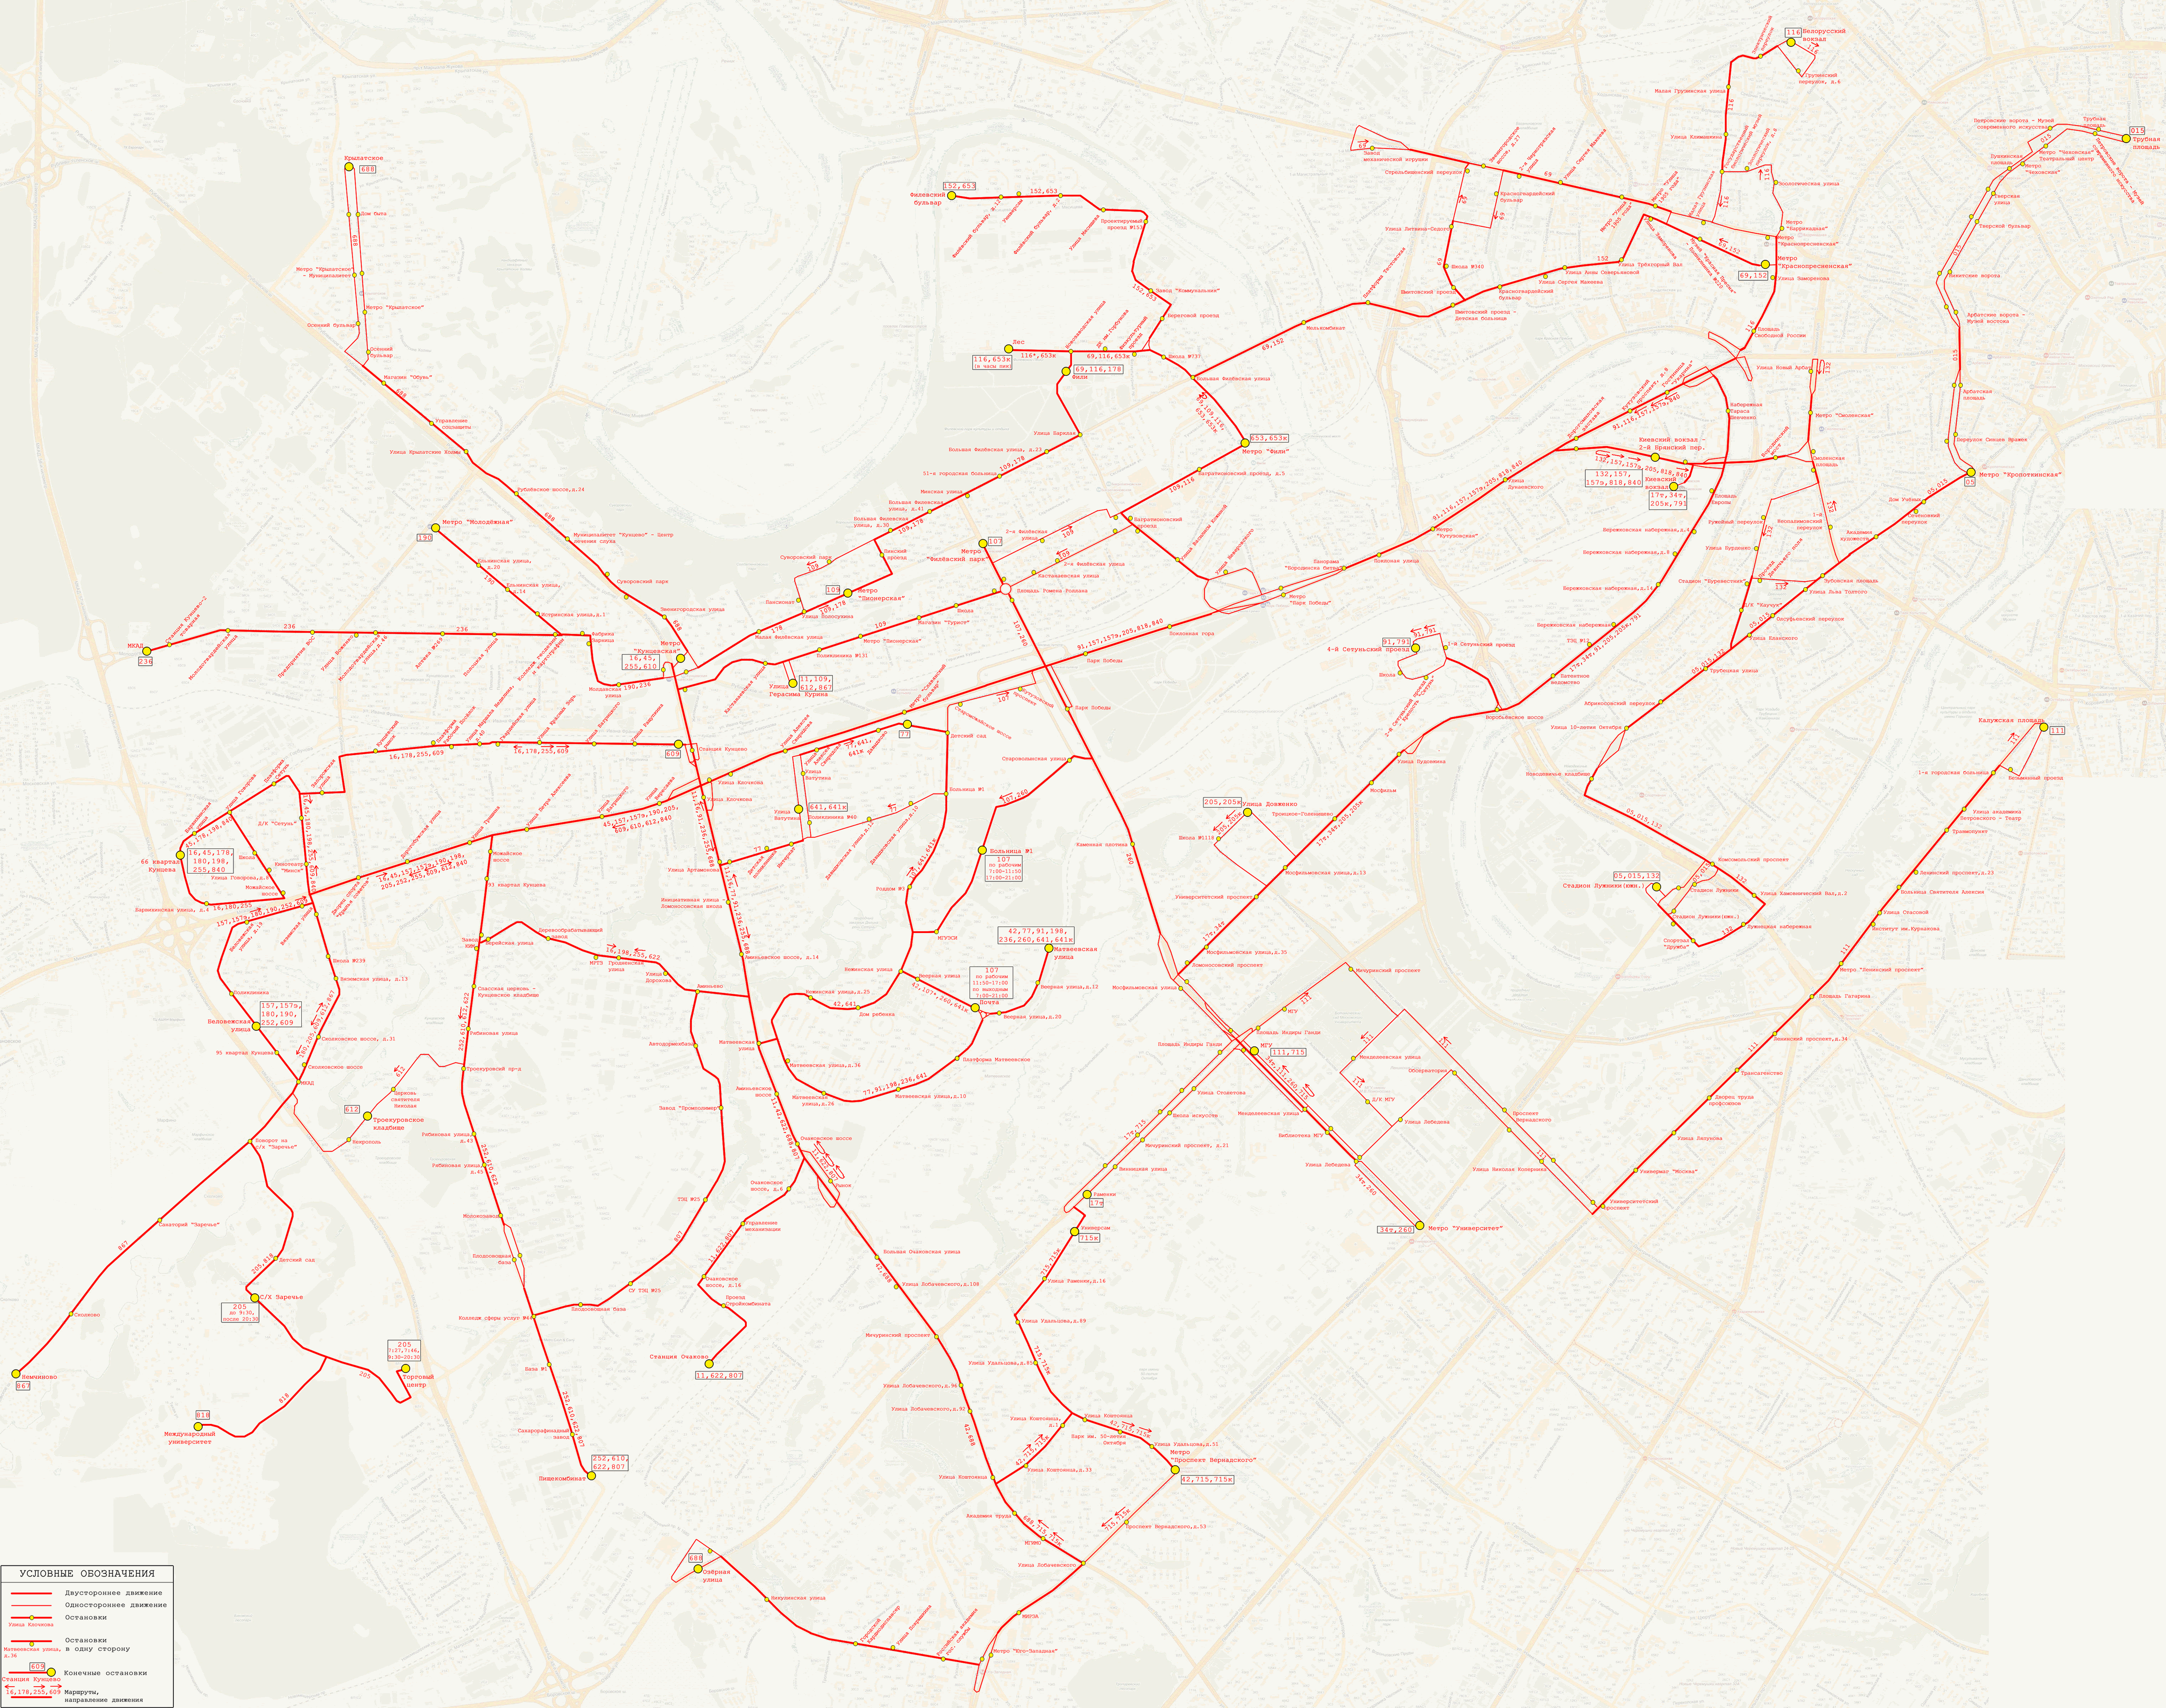 Moskva — Maps; Maps routes